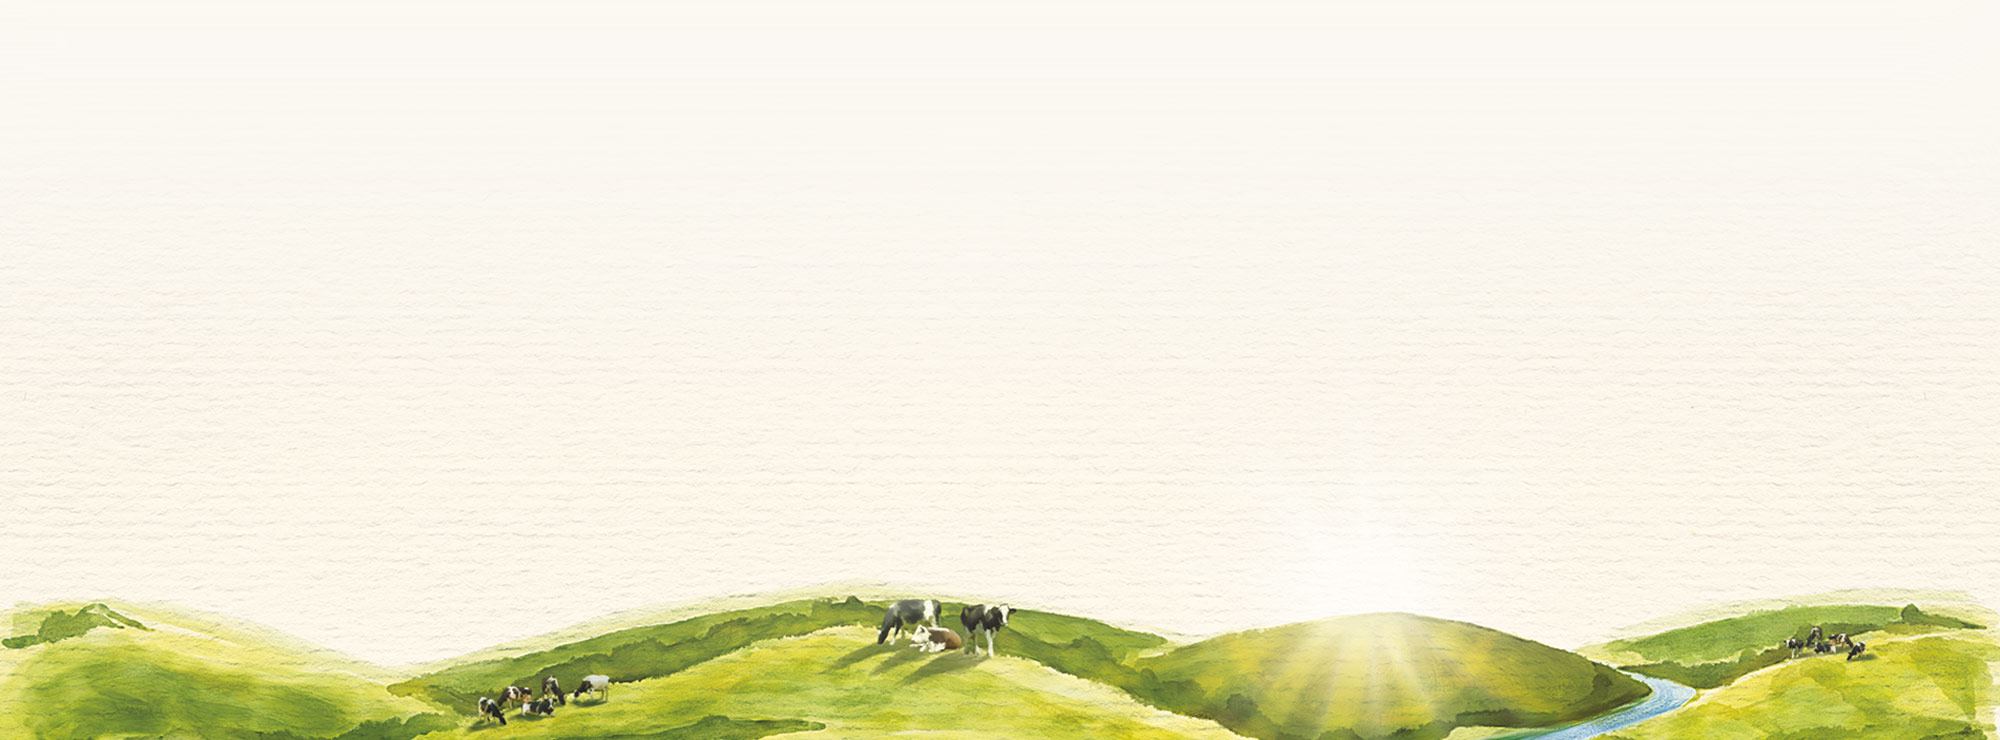 Karinourish - Rural Background With Cows